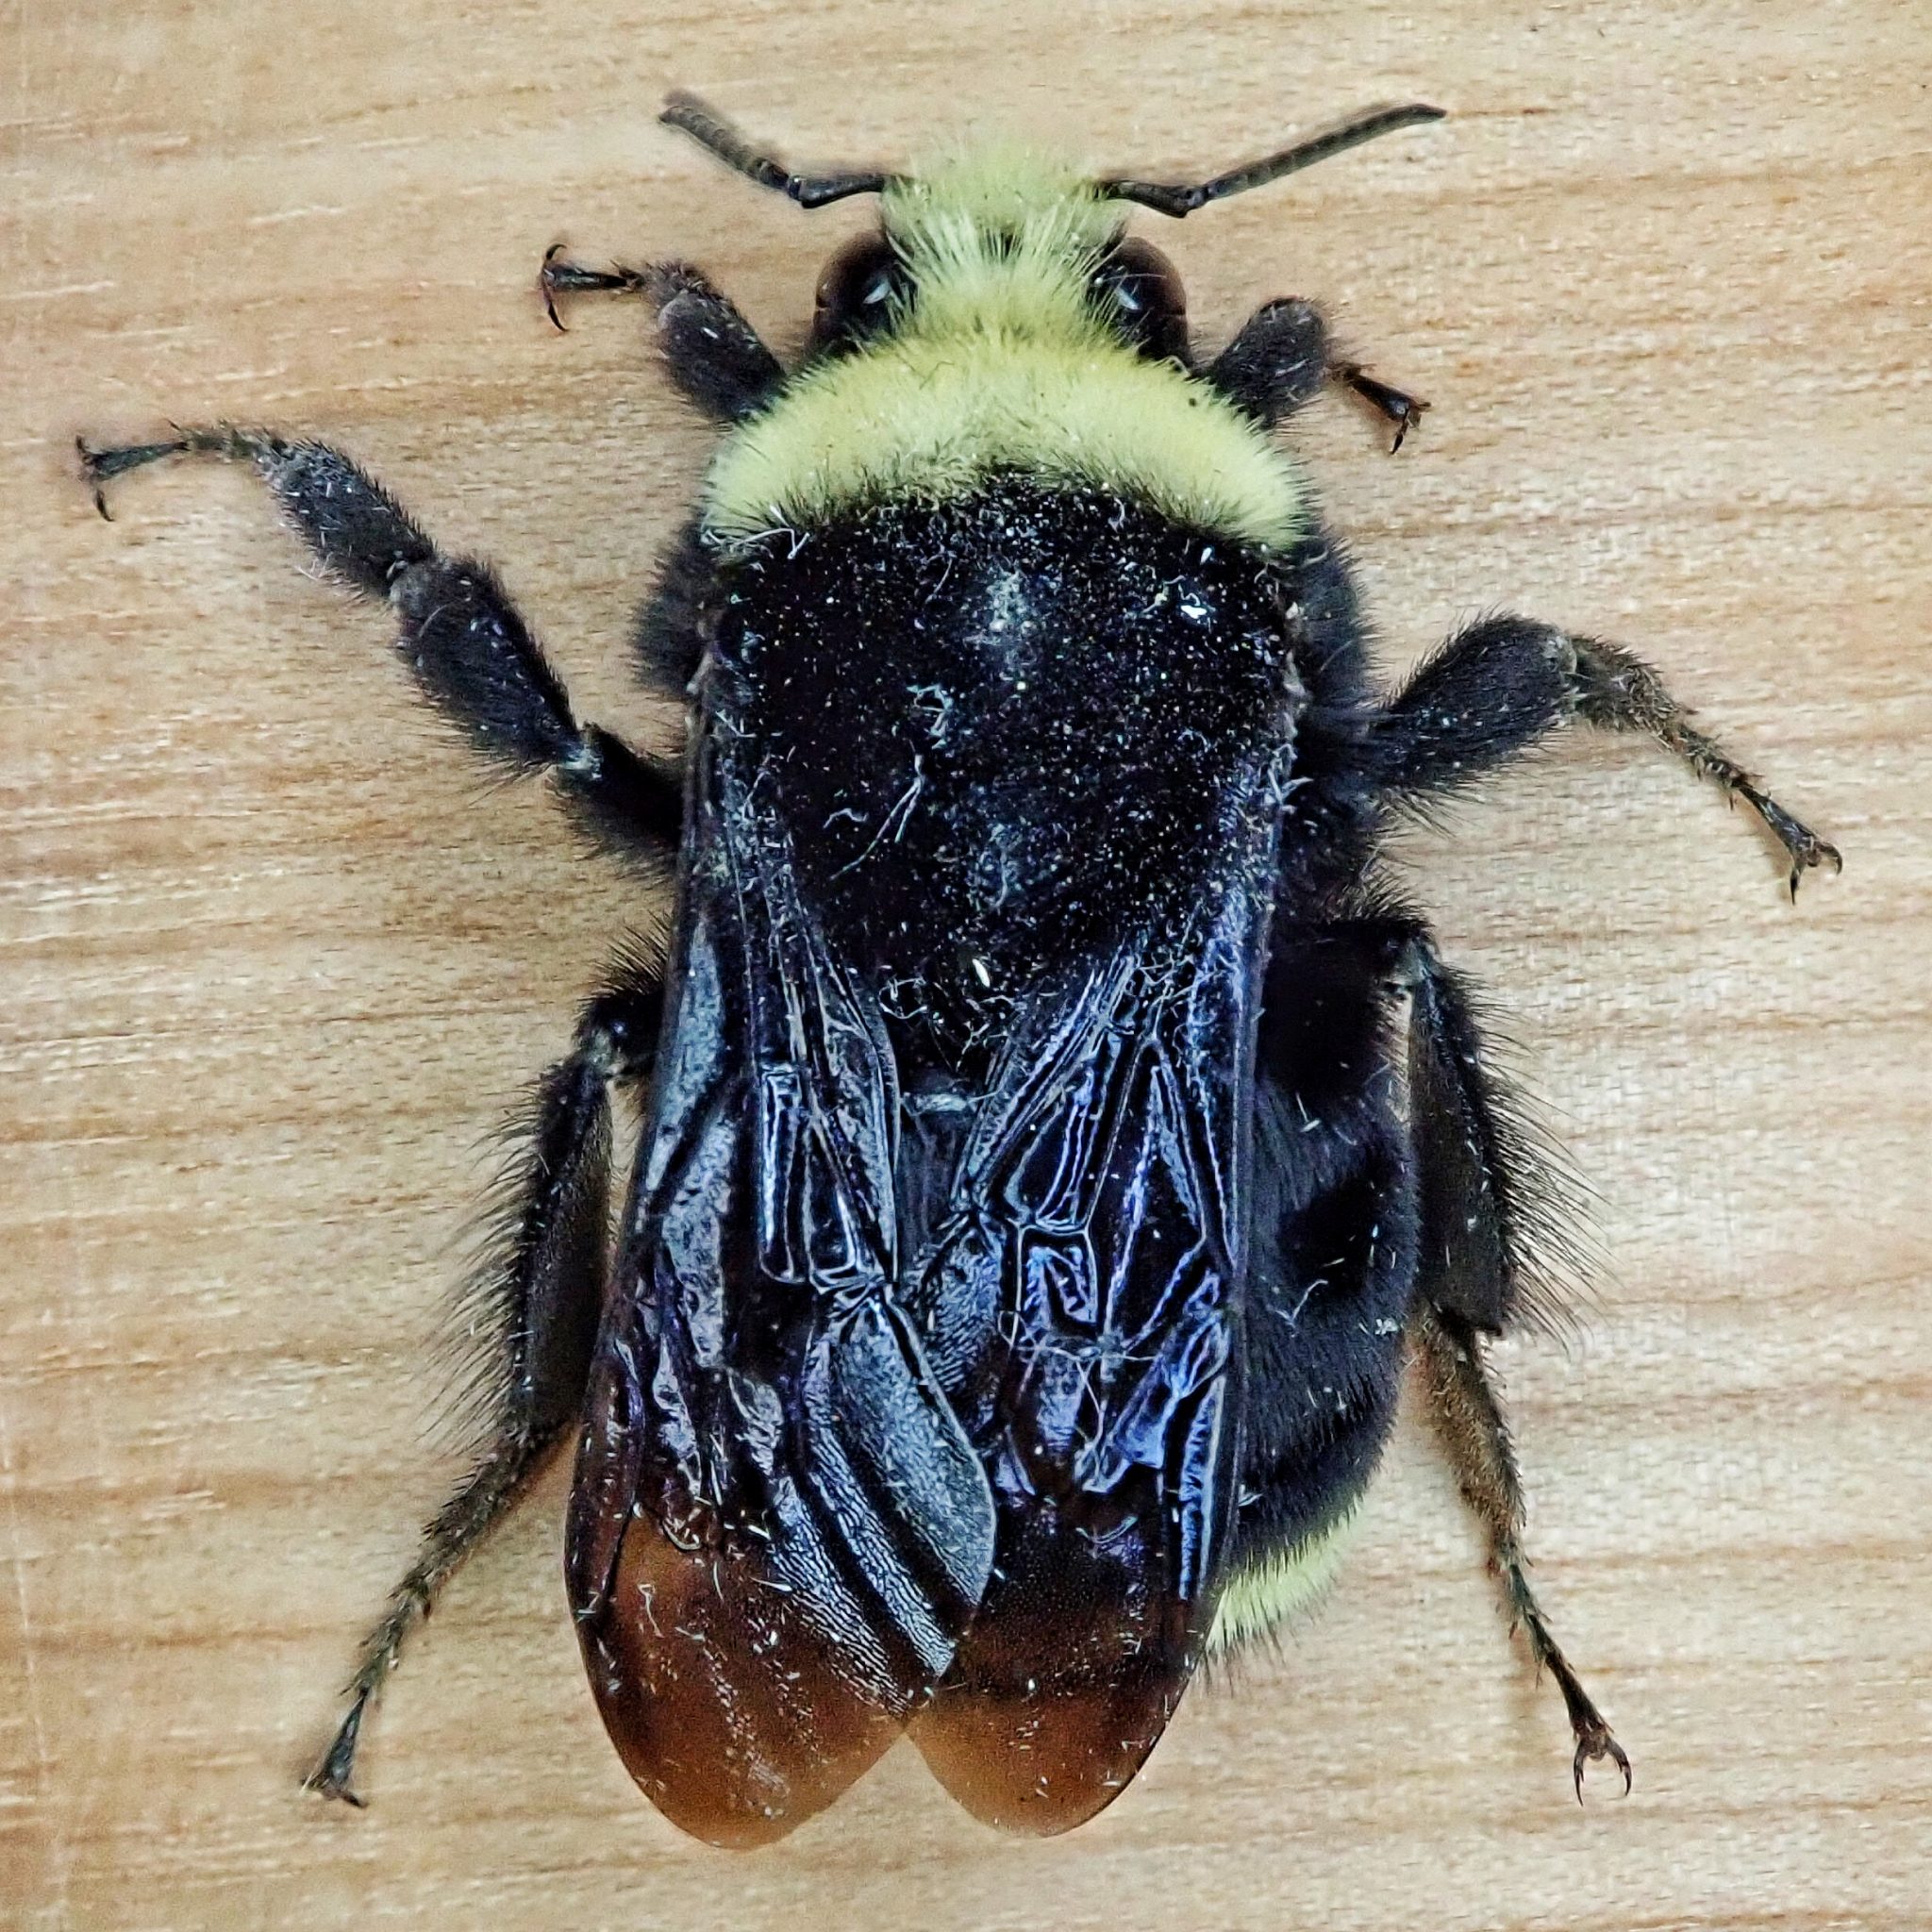 giant black bee